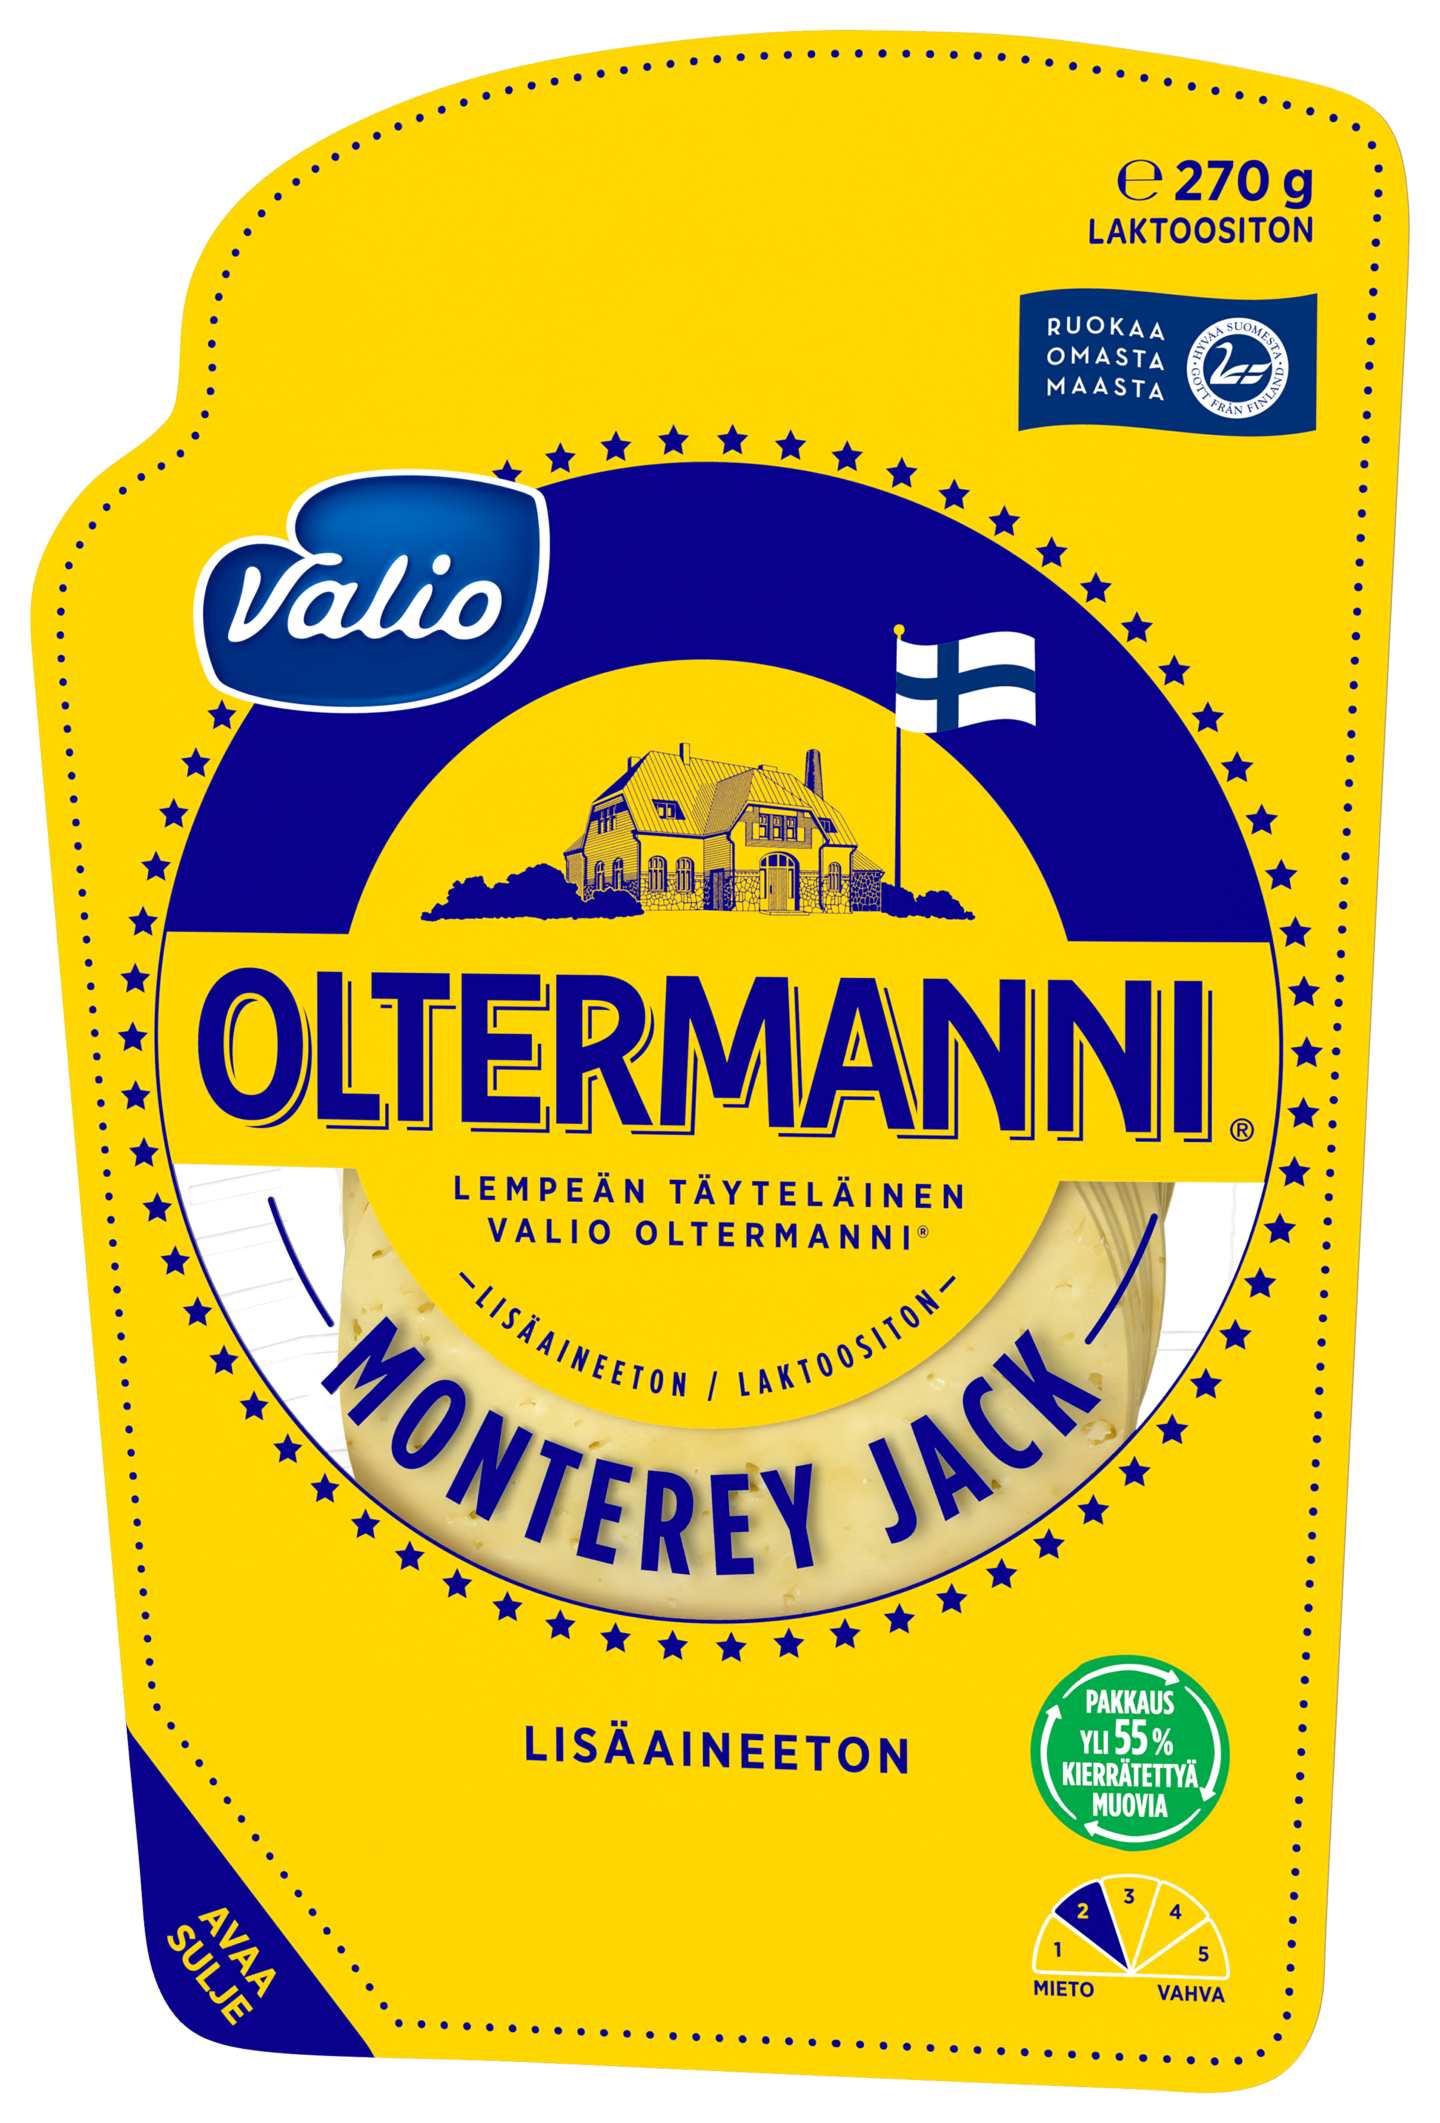 Valio Oltermanni® Monterey Jack e270g viipale